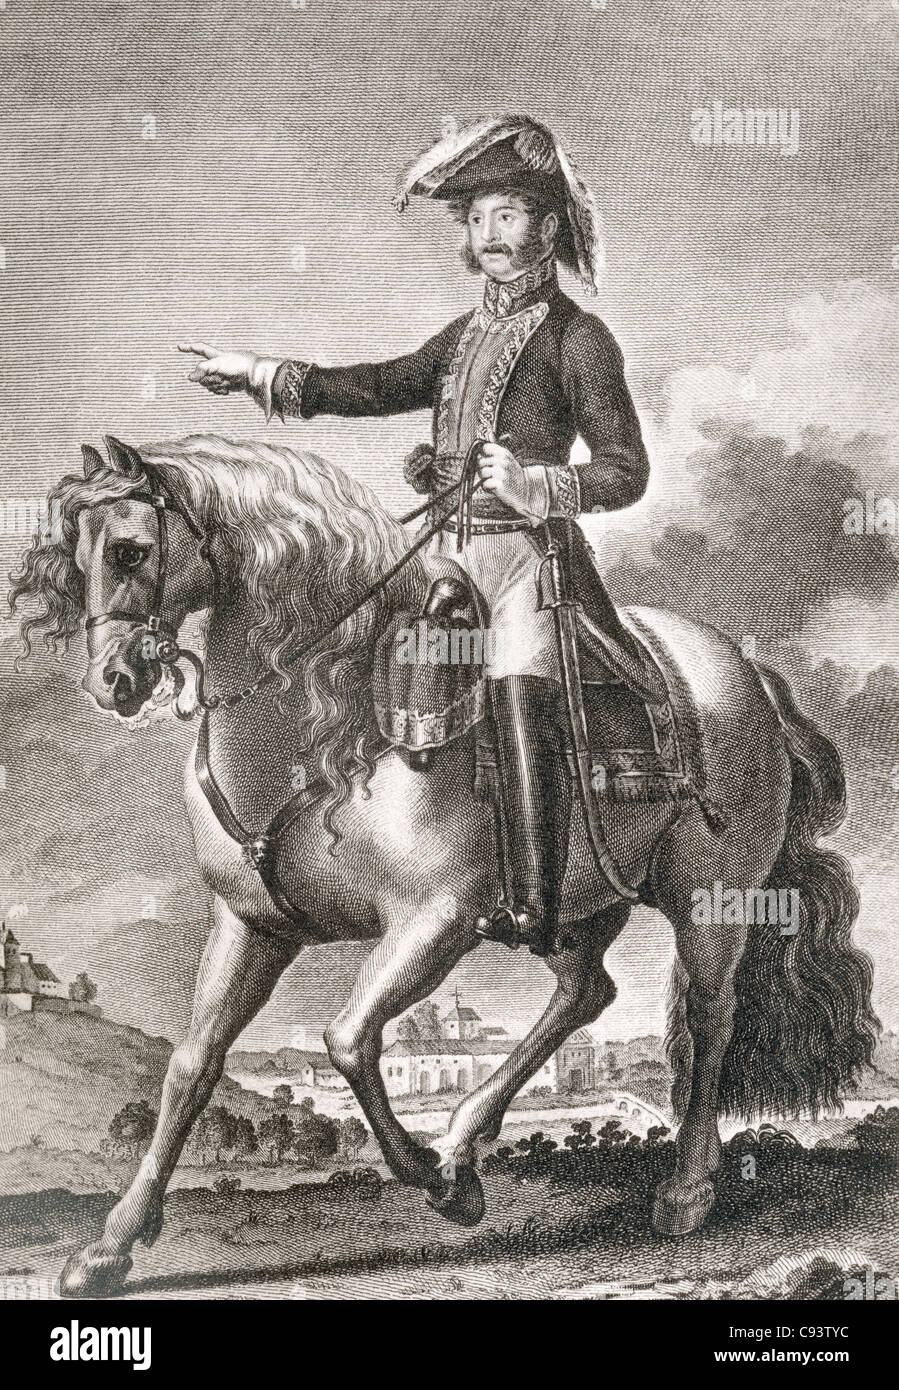 José Rebolledo de Palafox y Melzi, Duque de Zaragoza,1780 - 1847. L'Espagnol général qui participe à la campagne. Banque D'Images